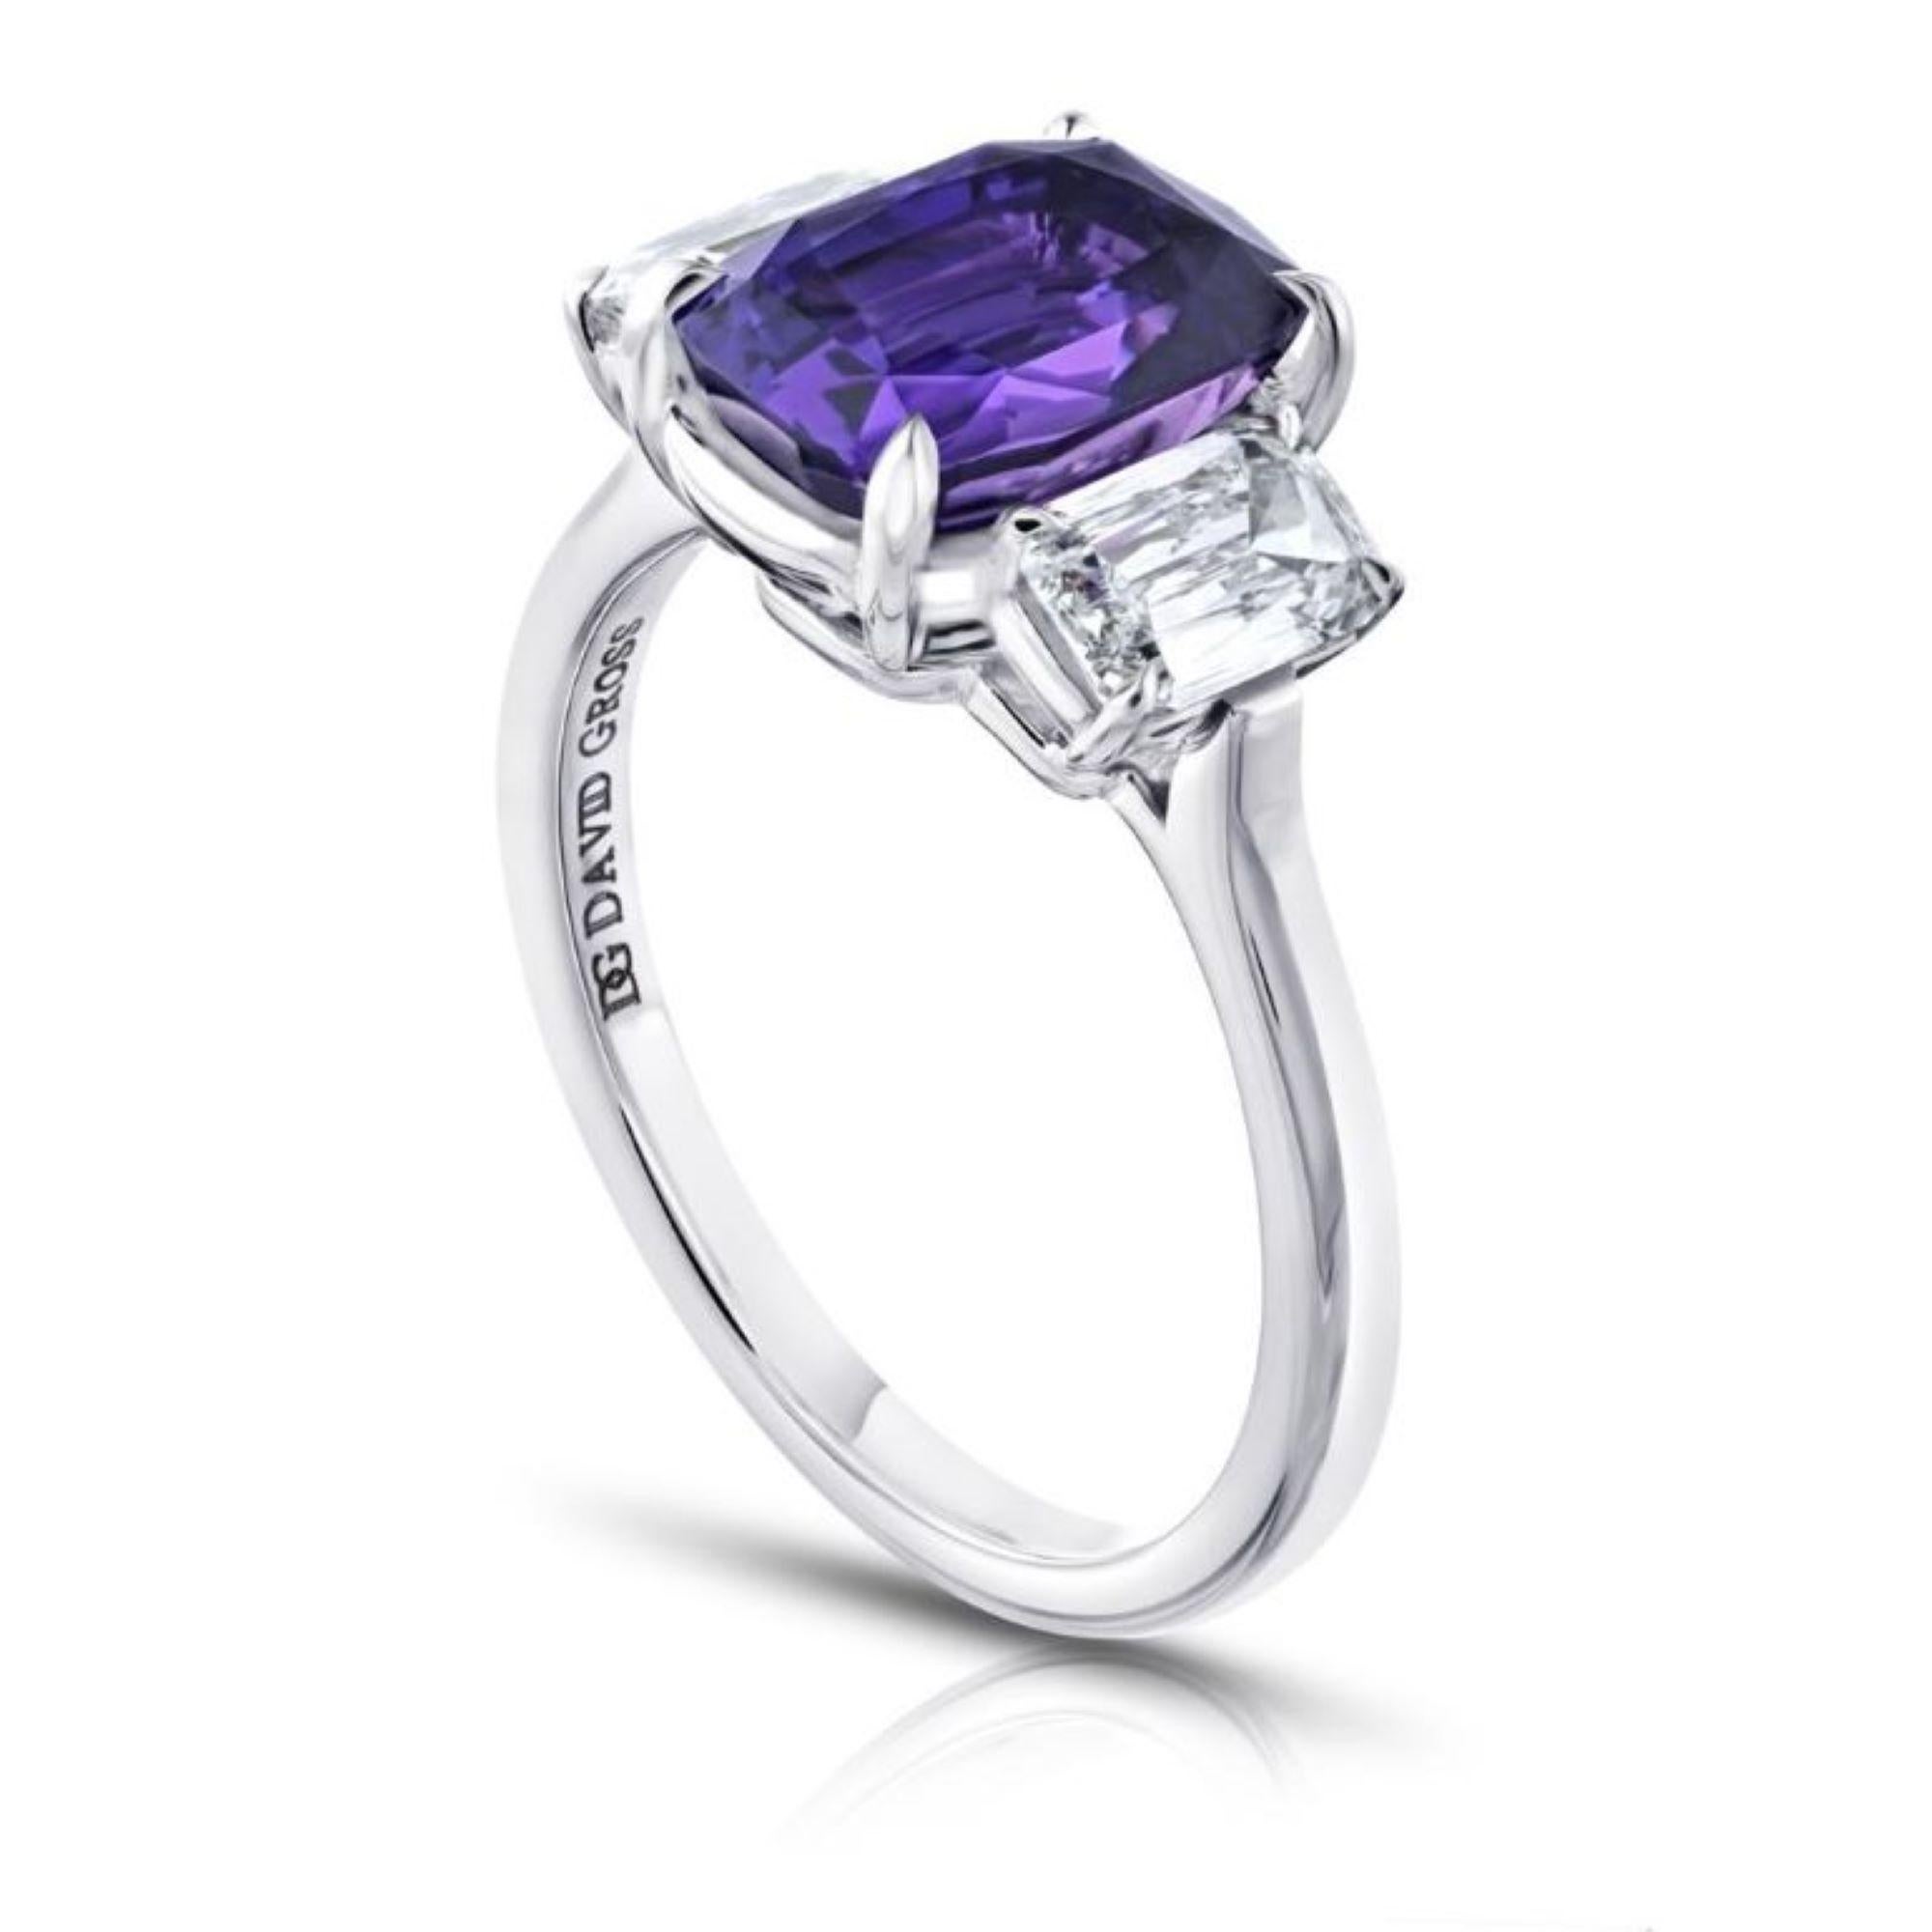 3.72 carat Cushion Purple Sapphire with two Cushion Diamonds .97 carats set in a handmade Platinum ring